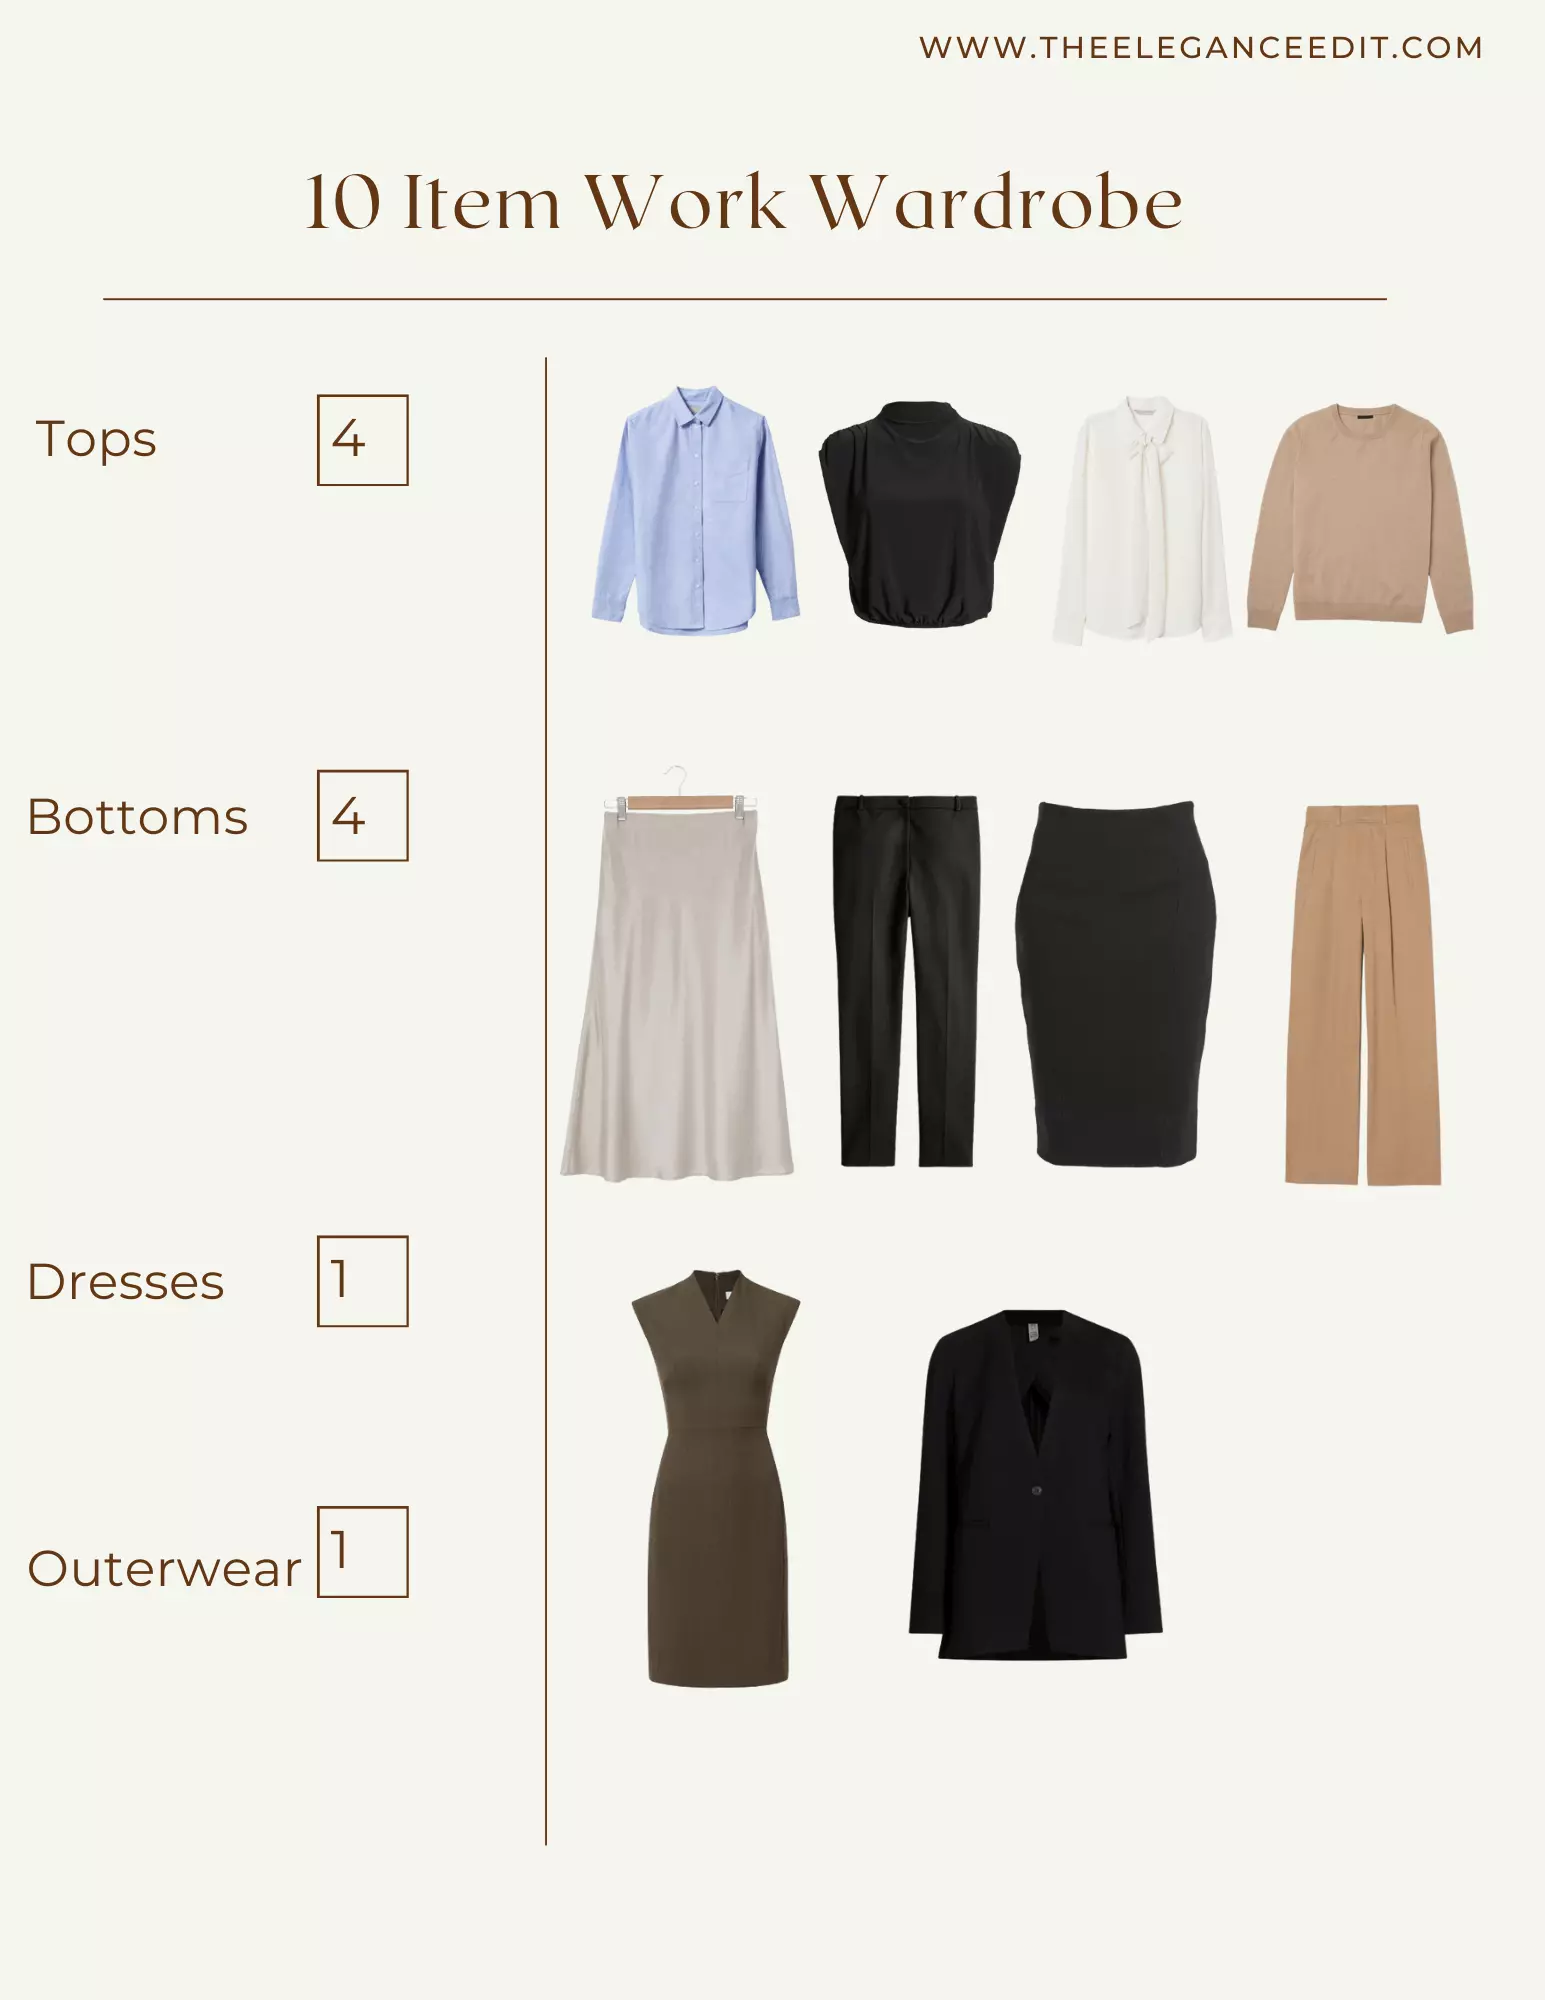 Under Wardrobe Staples By Organic Basics - Ten Key Pieces